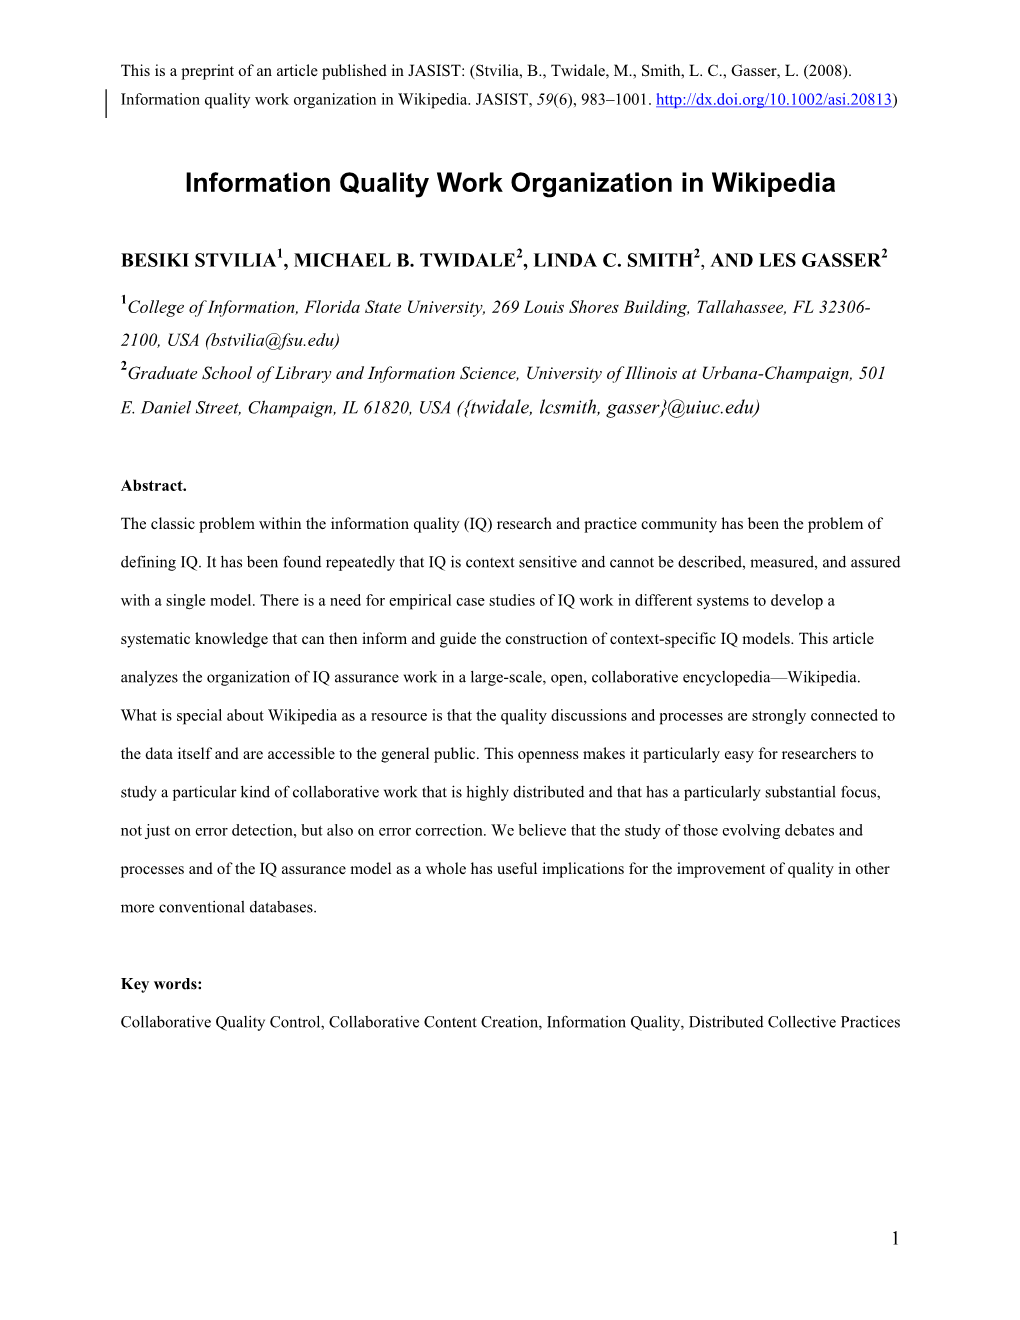 Information Quality Work Organization in Wikipedia